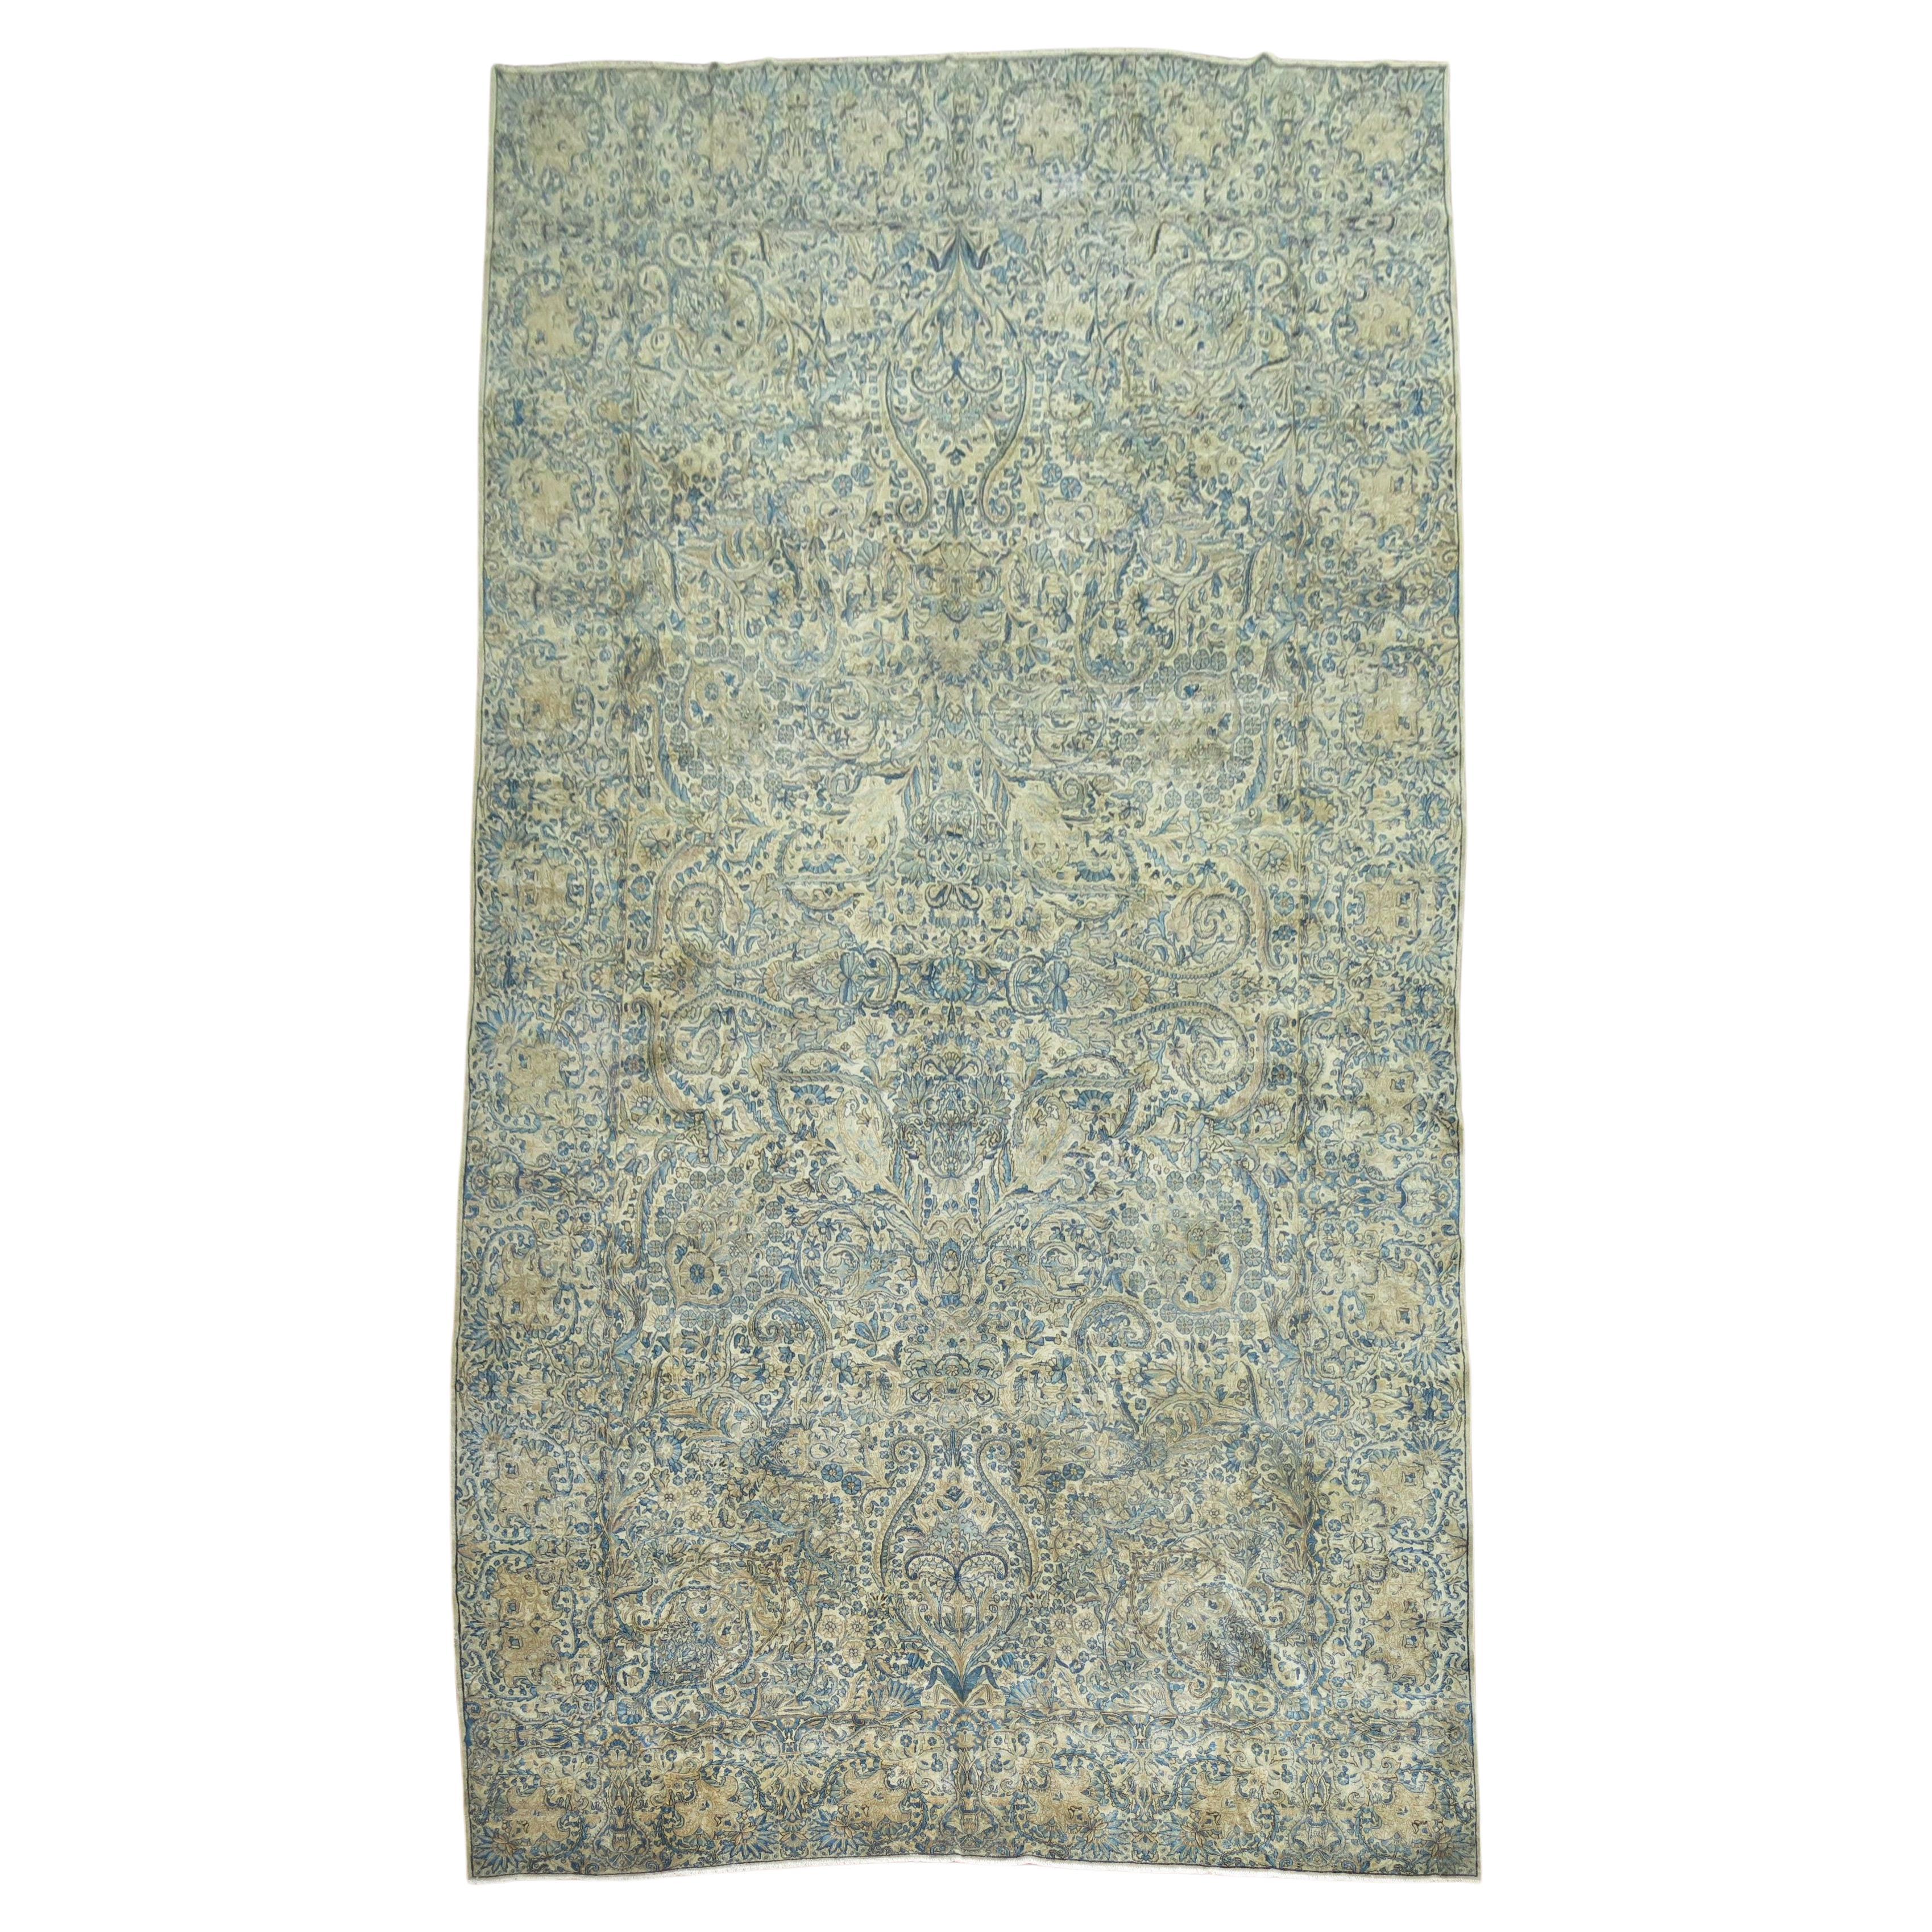 Oversize Antique Persian Kerman Carpet 